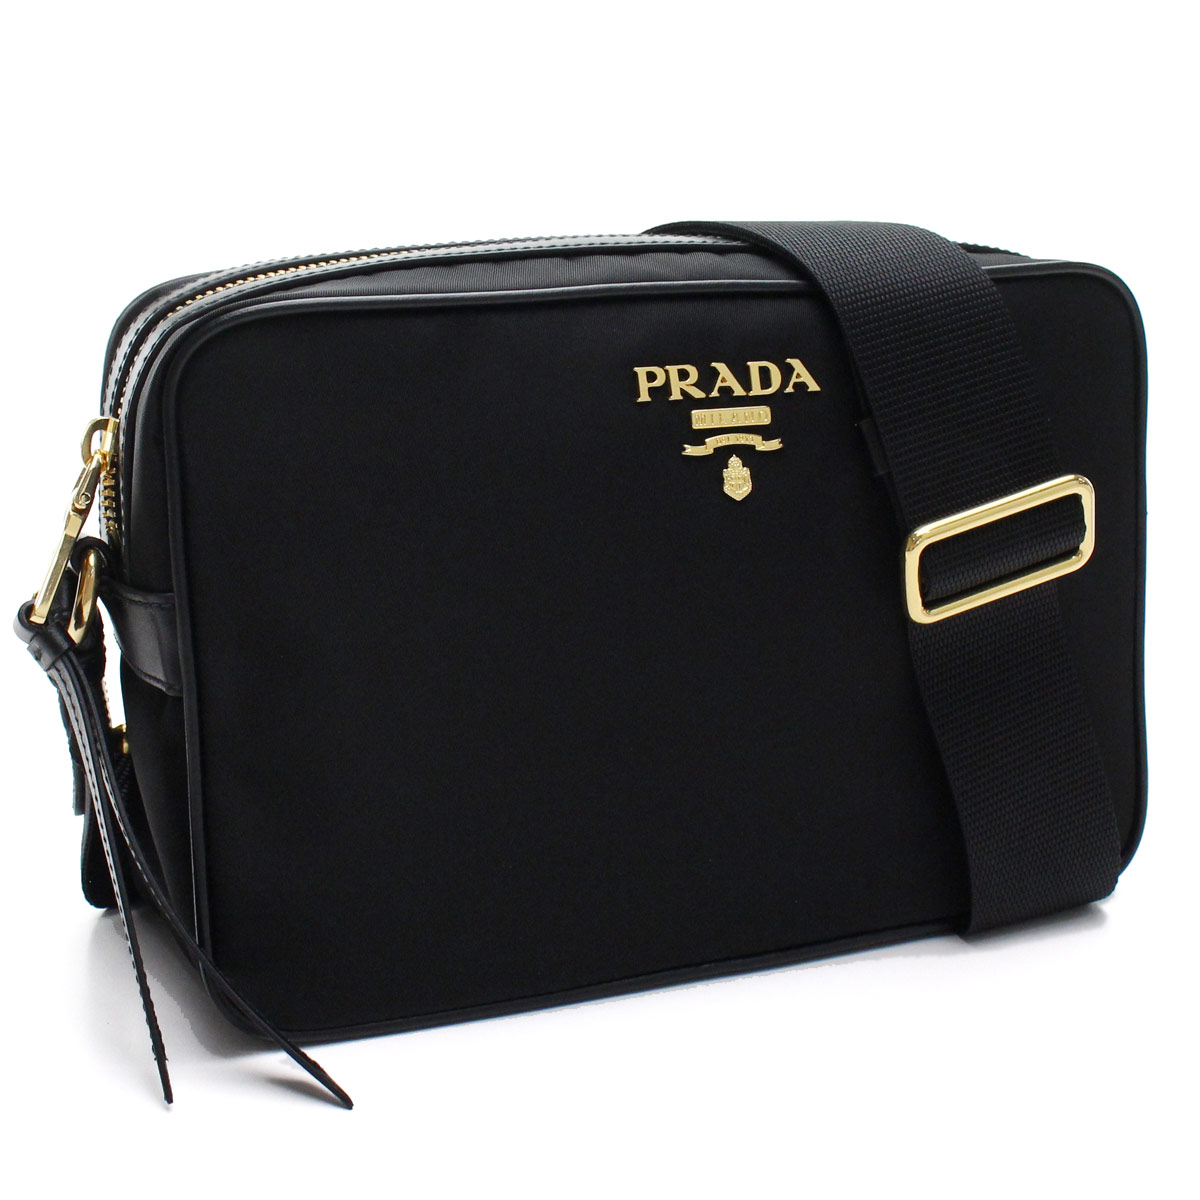 prada handbags outlet uk, OFF 72%,www 